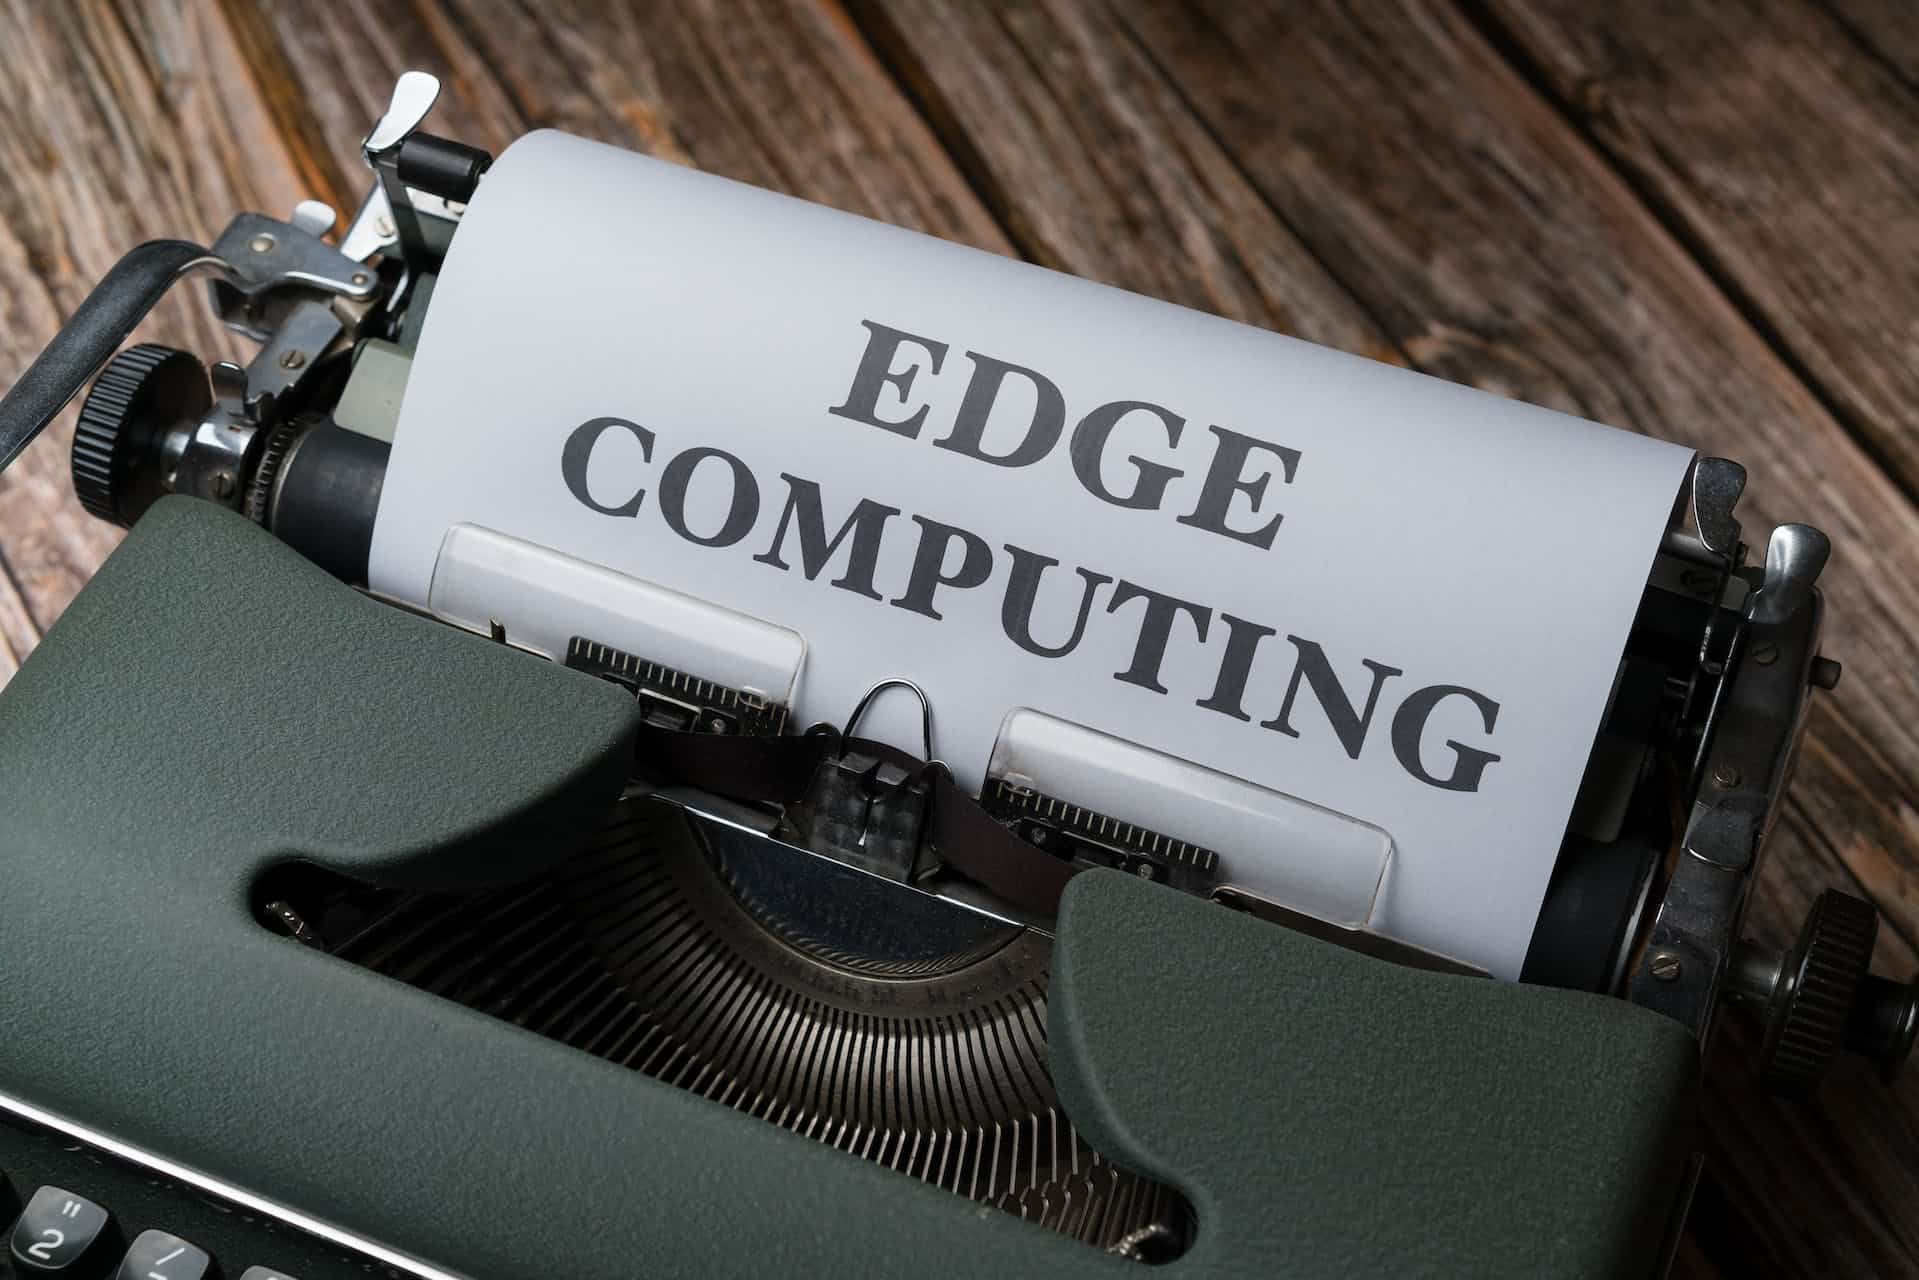 Edge Computing and Serverless Functions